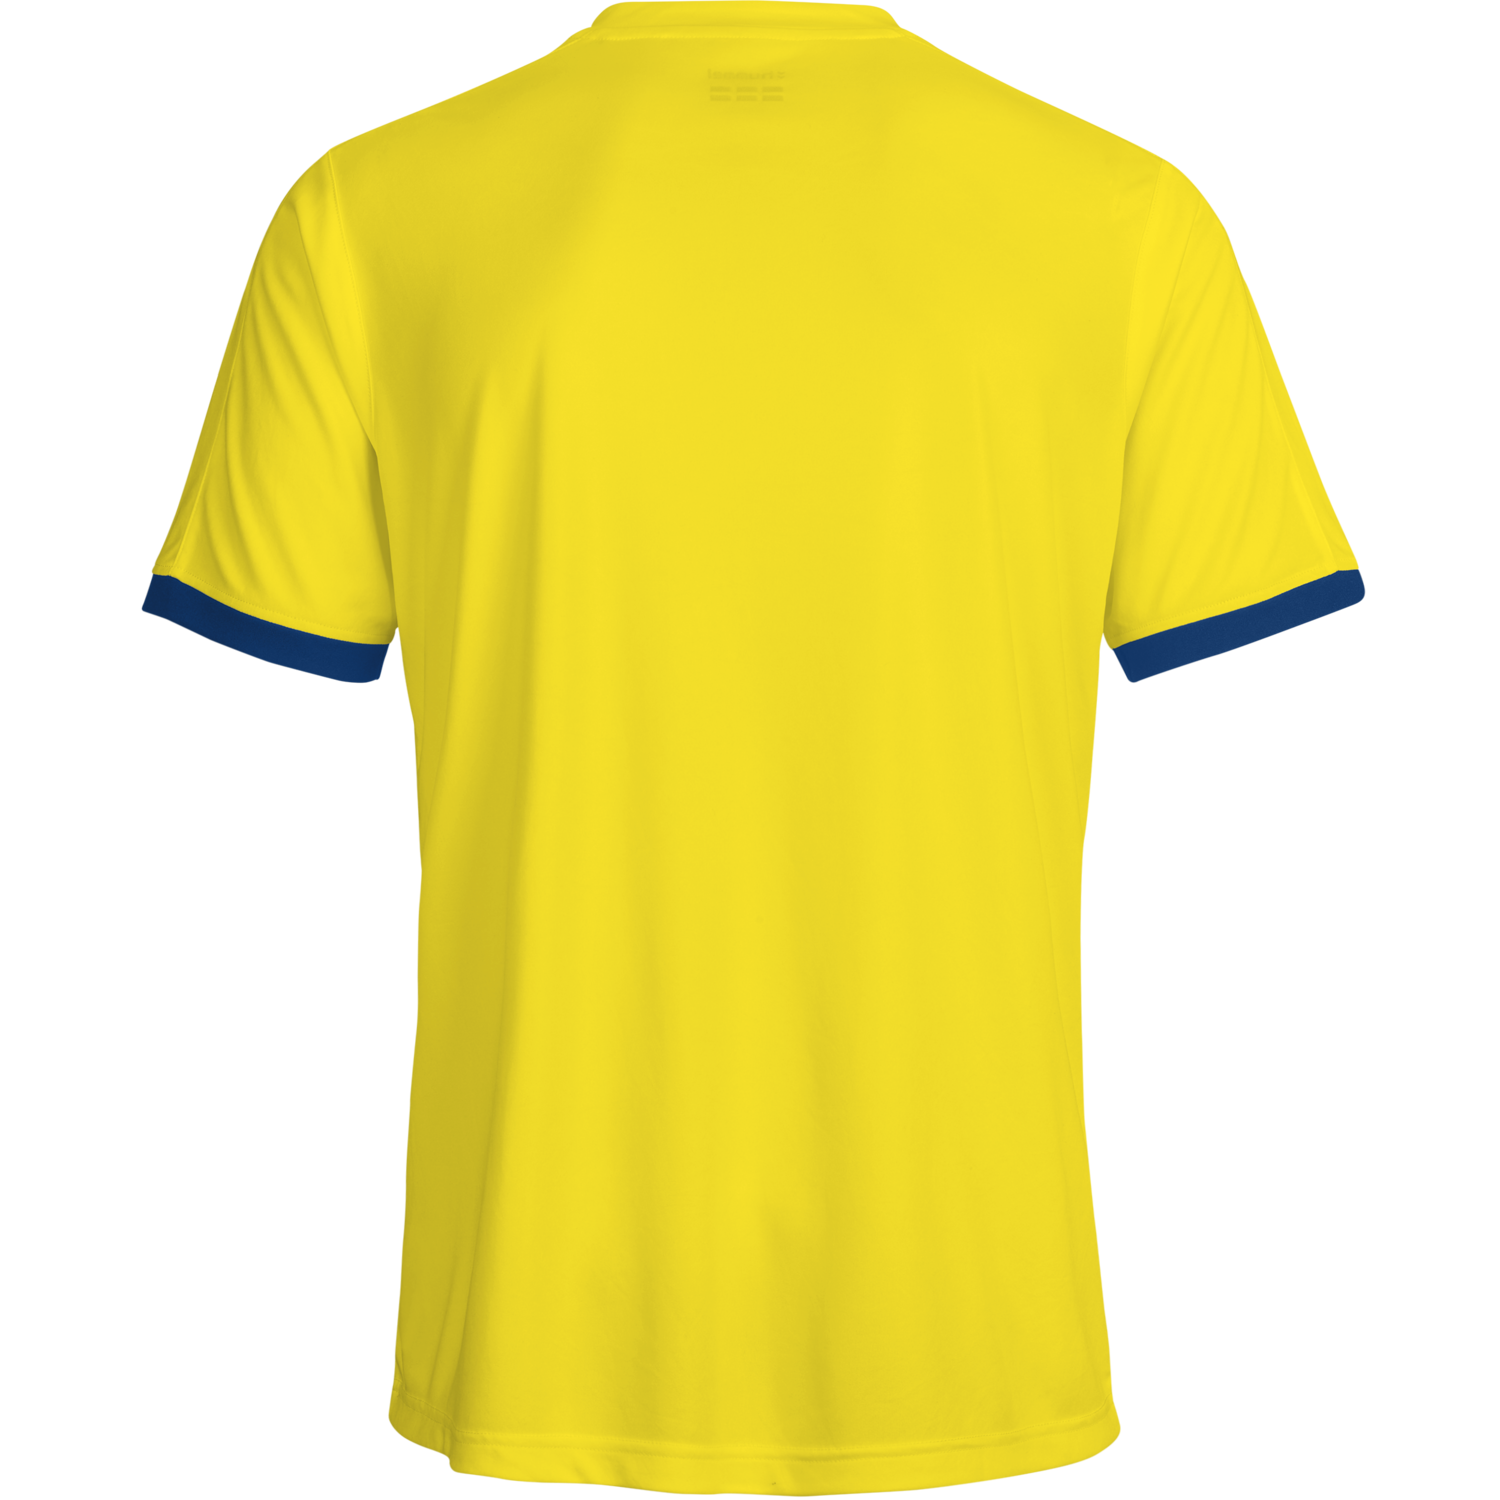 blue yellow jersey